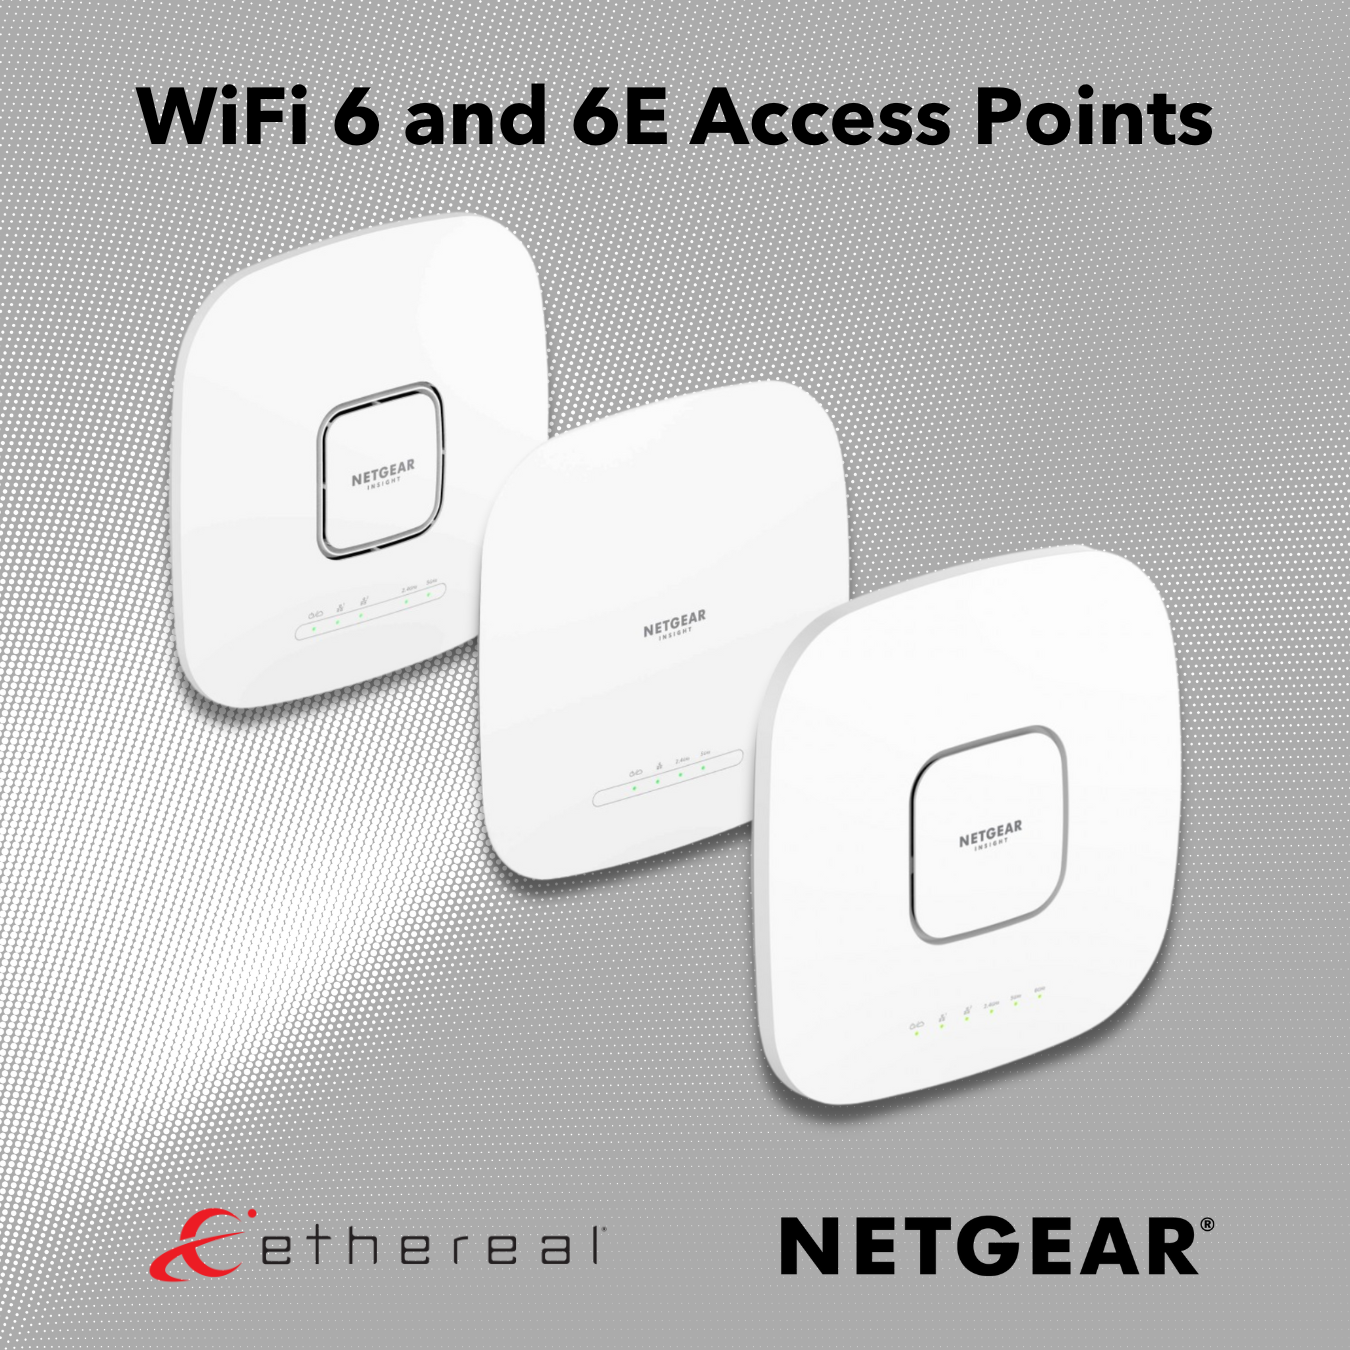 NETGEAR WiFi 6 and 6E Access Points